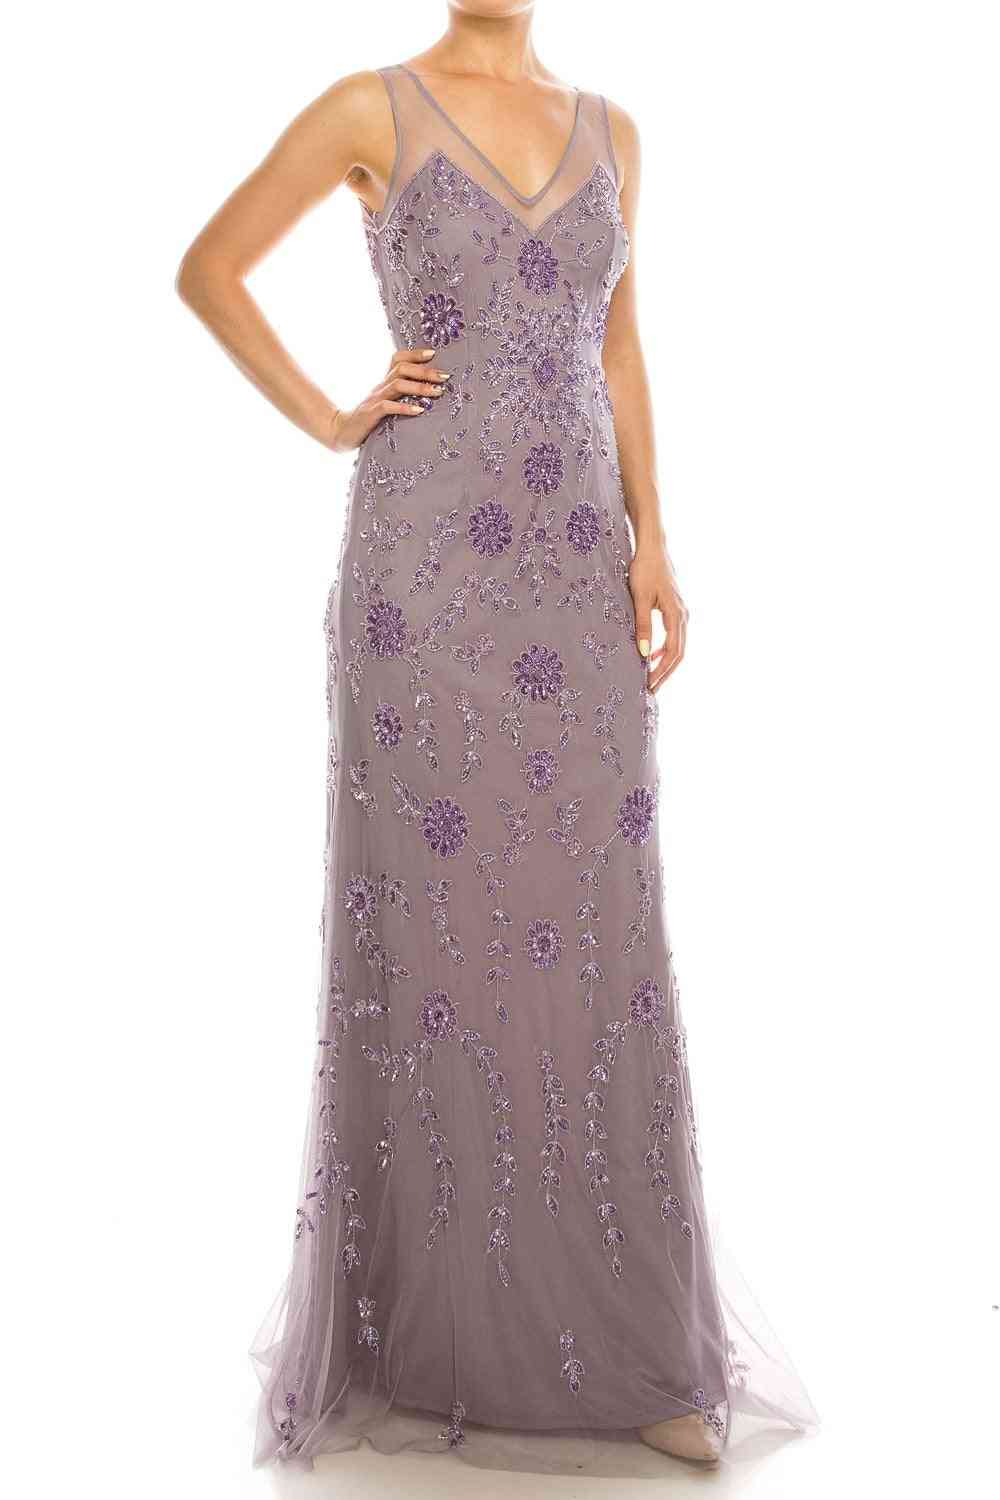 Illusion V-neckline, Sequin Floral Pattern, Mesh Overlay Dress